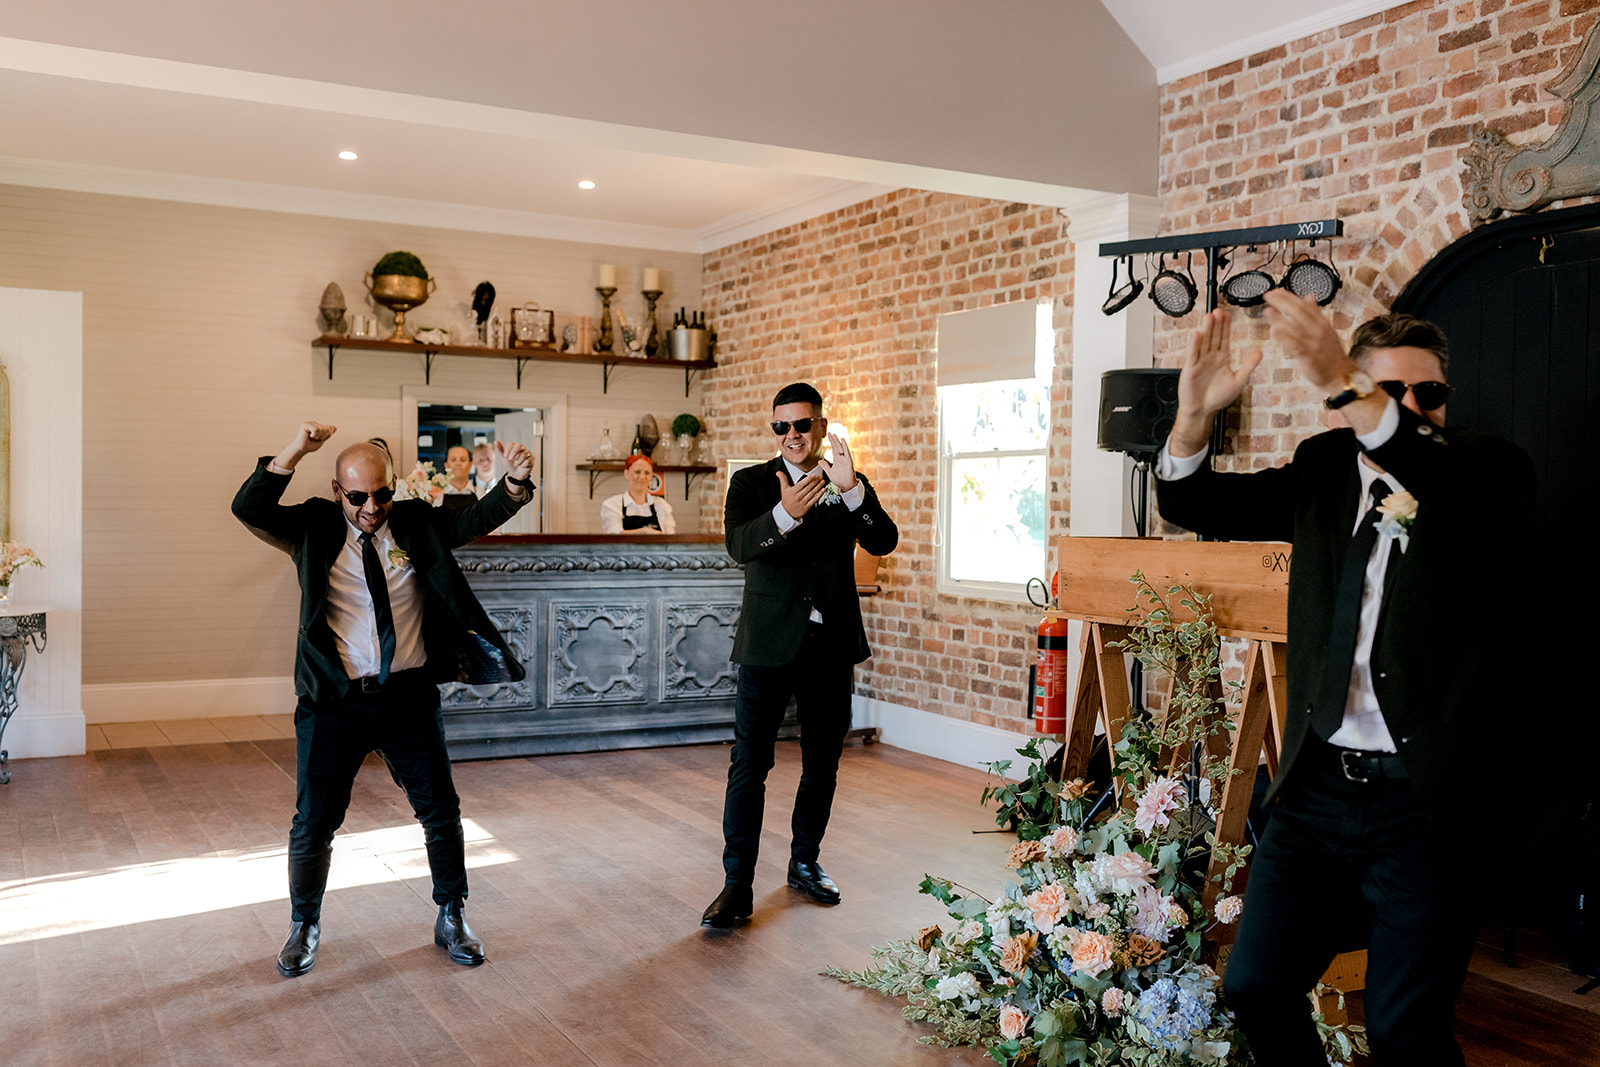 Groomsmen making a fun entrance at an elegant country wedding reception.